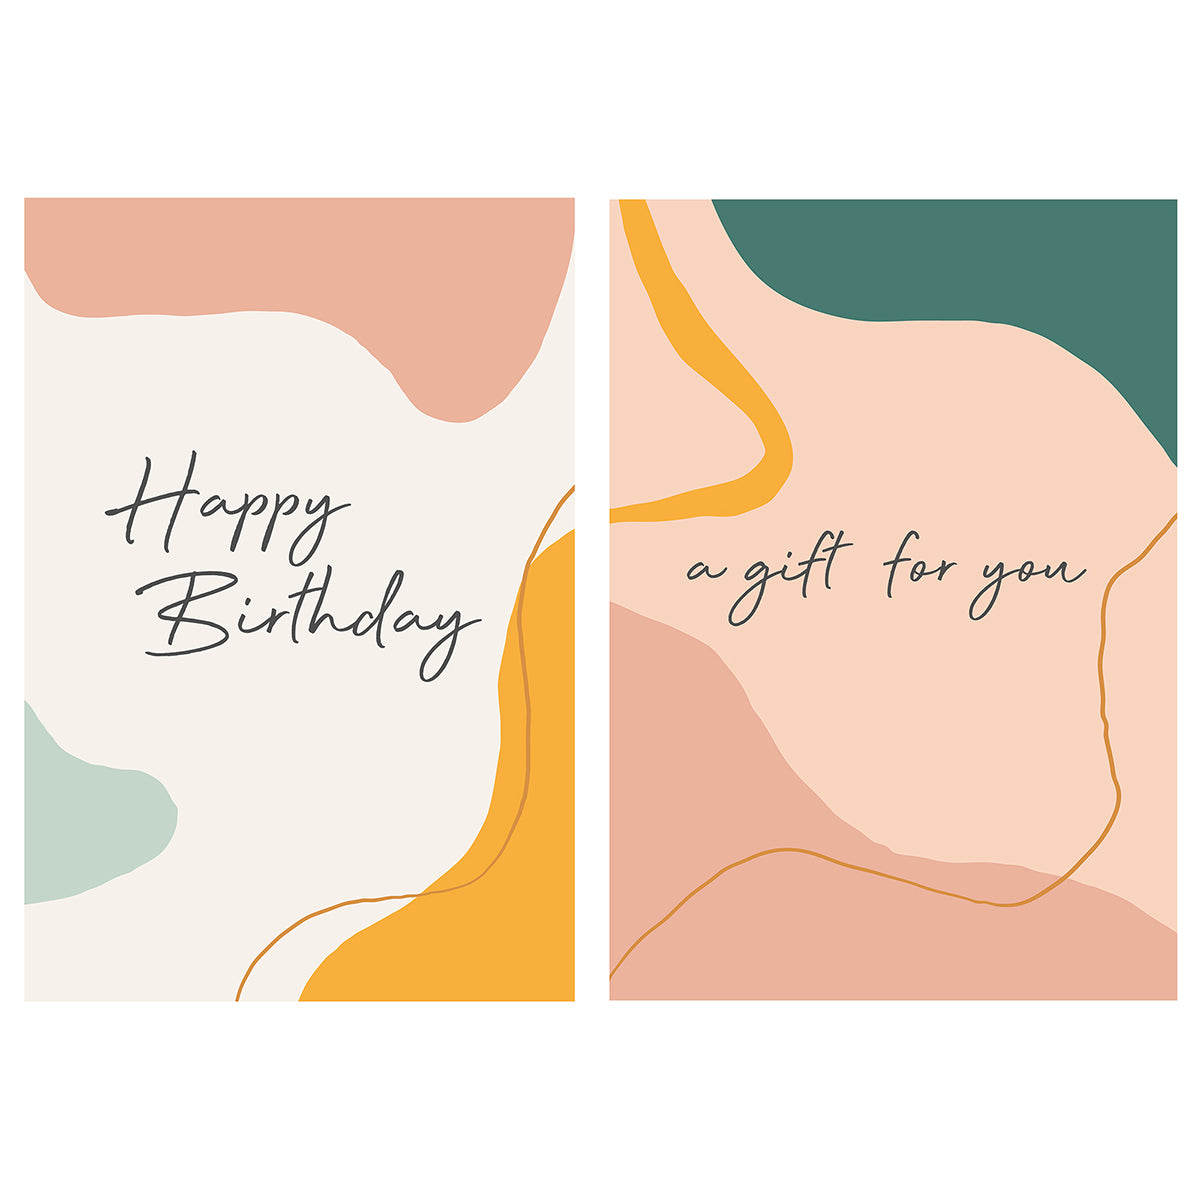 2 illustrative gift cards on white background